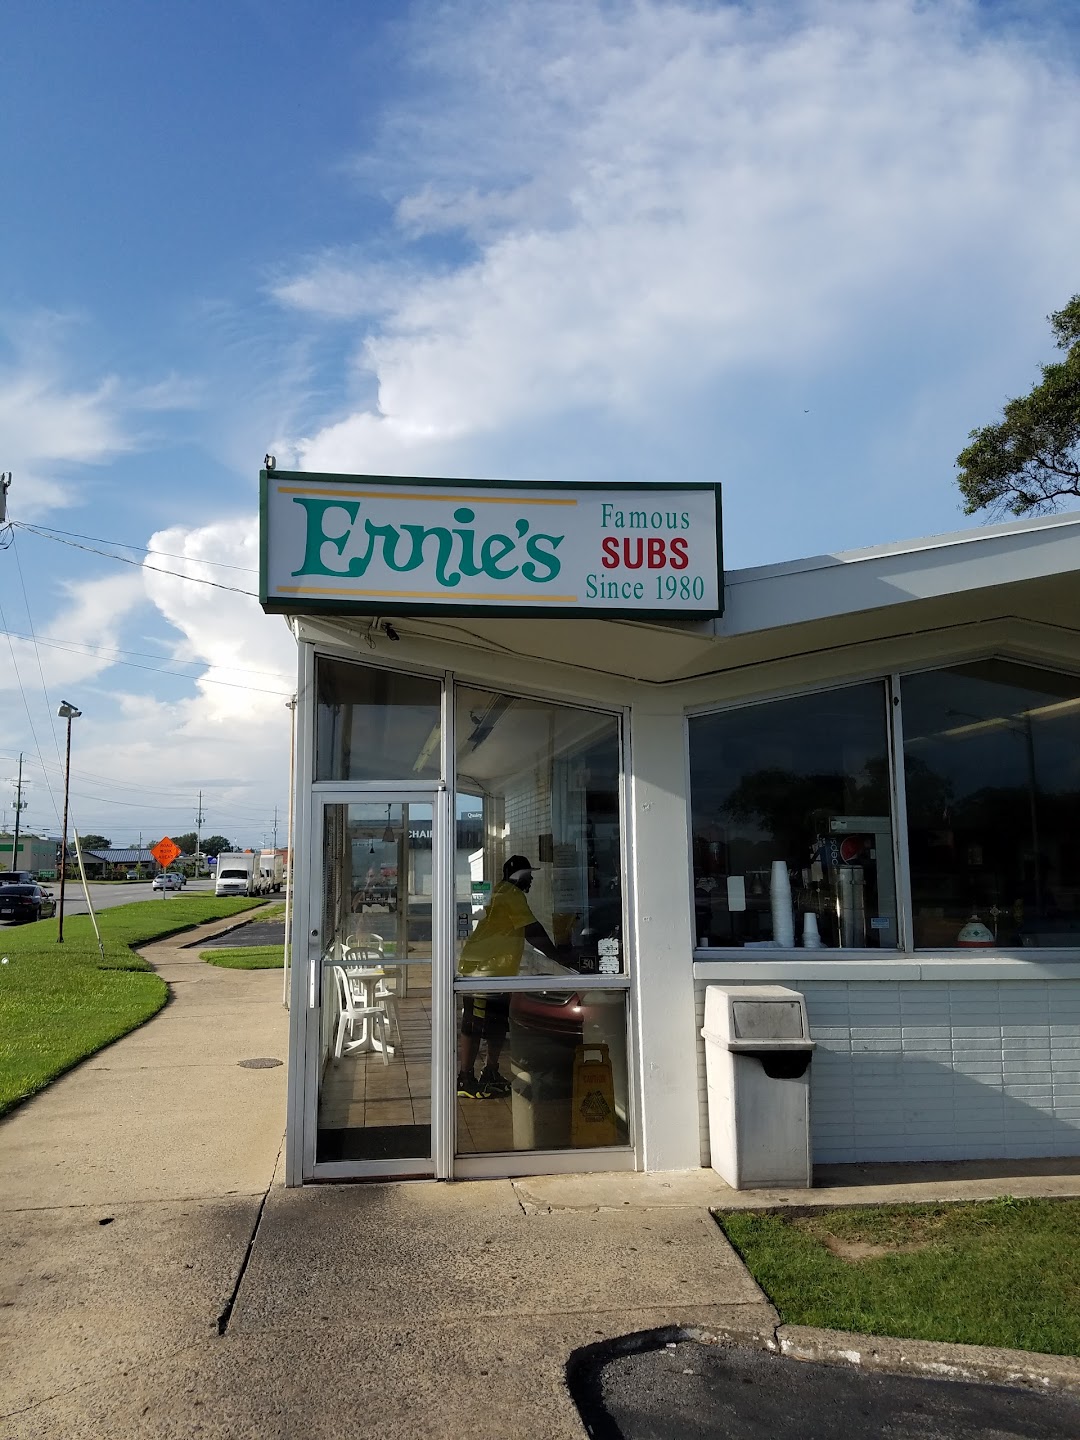 Ernies Famous Subs